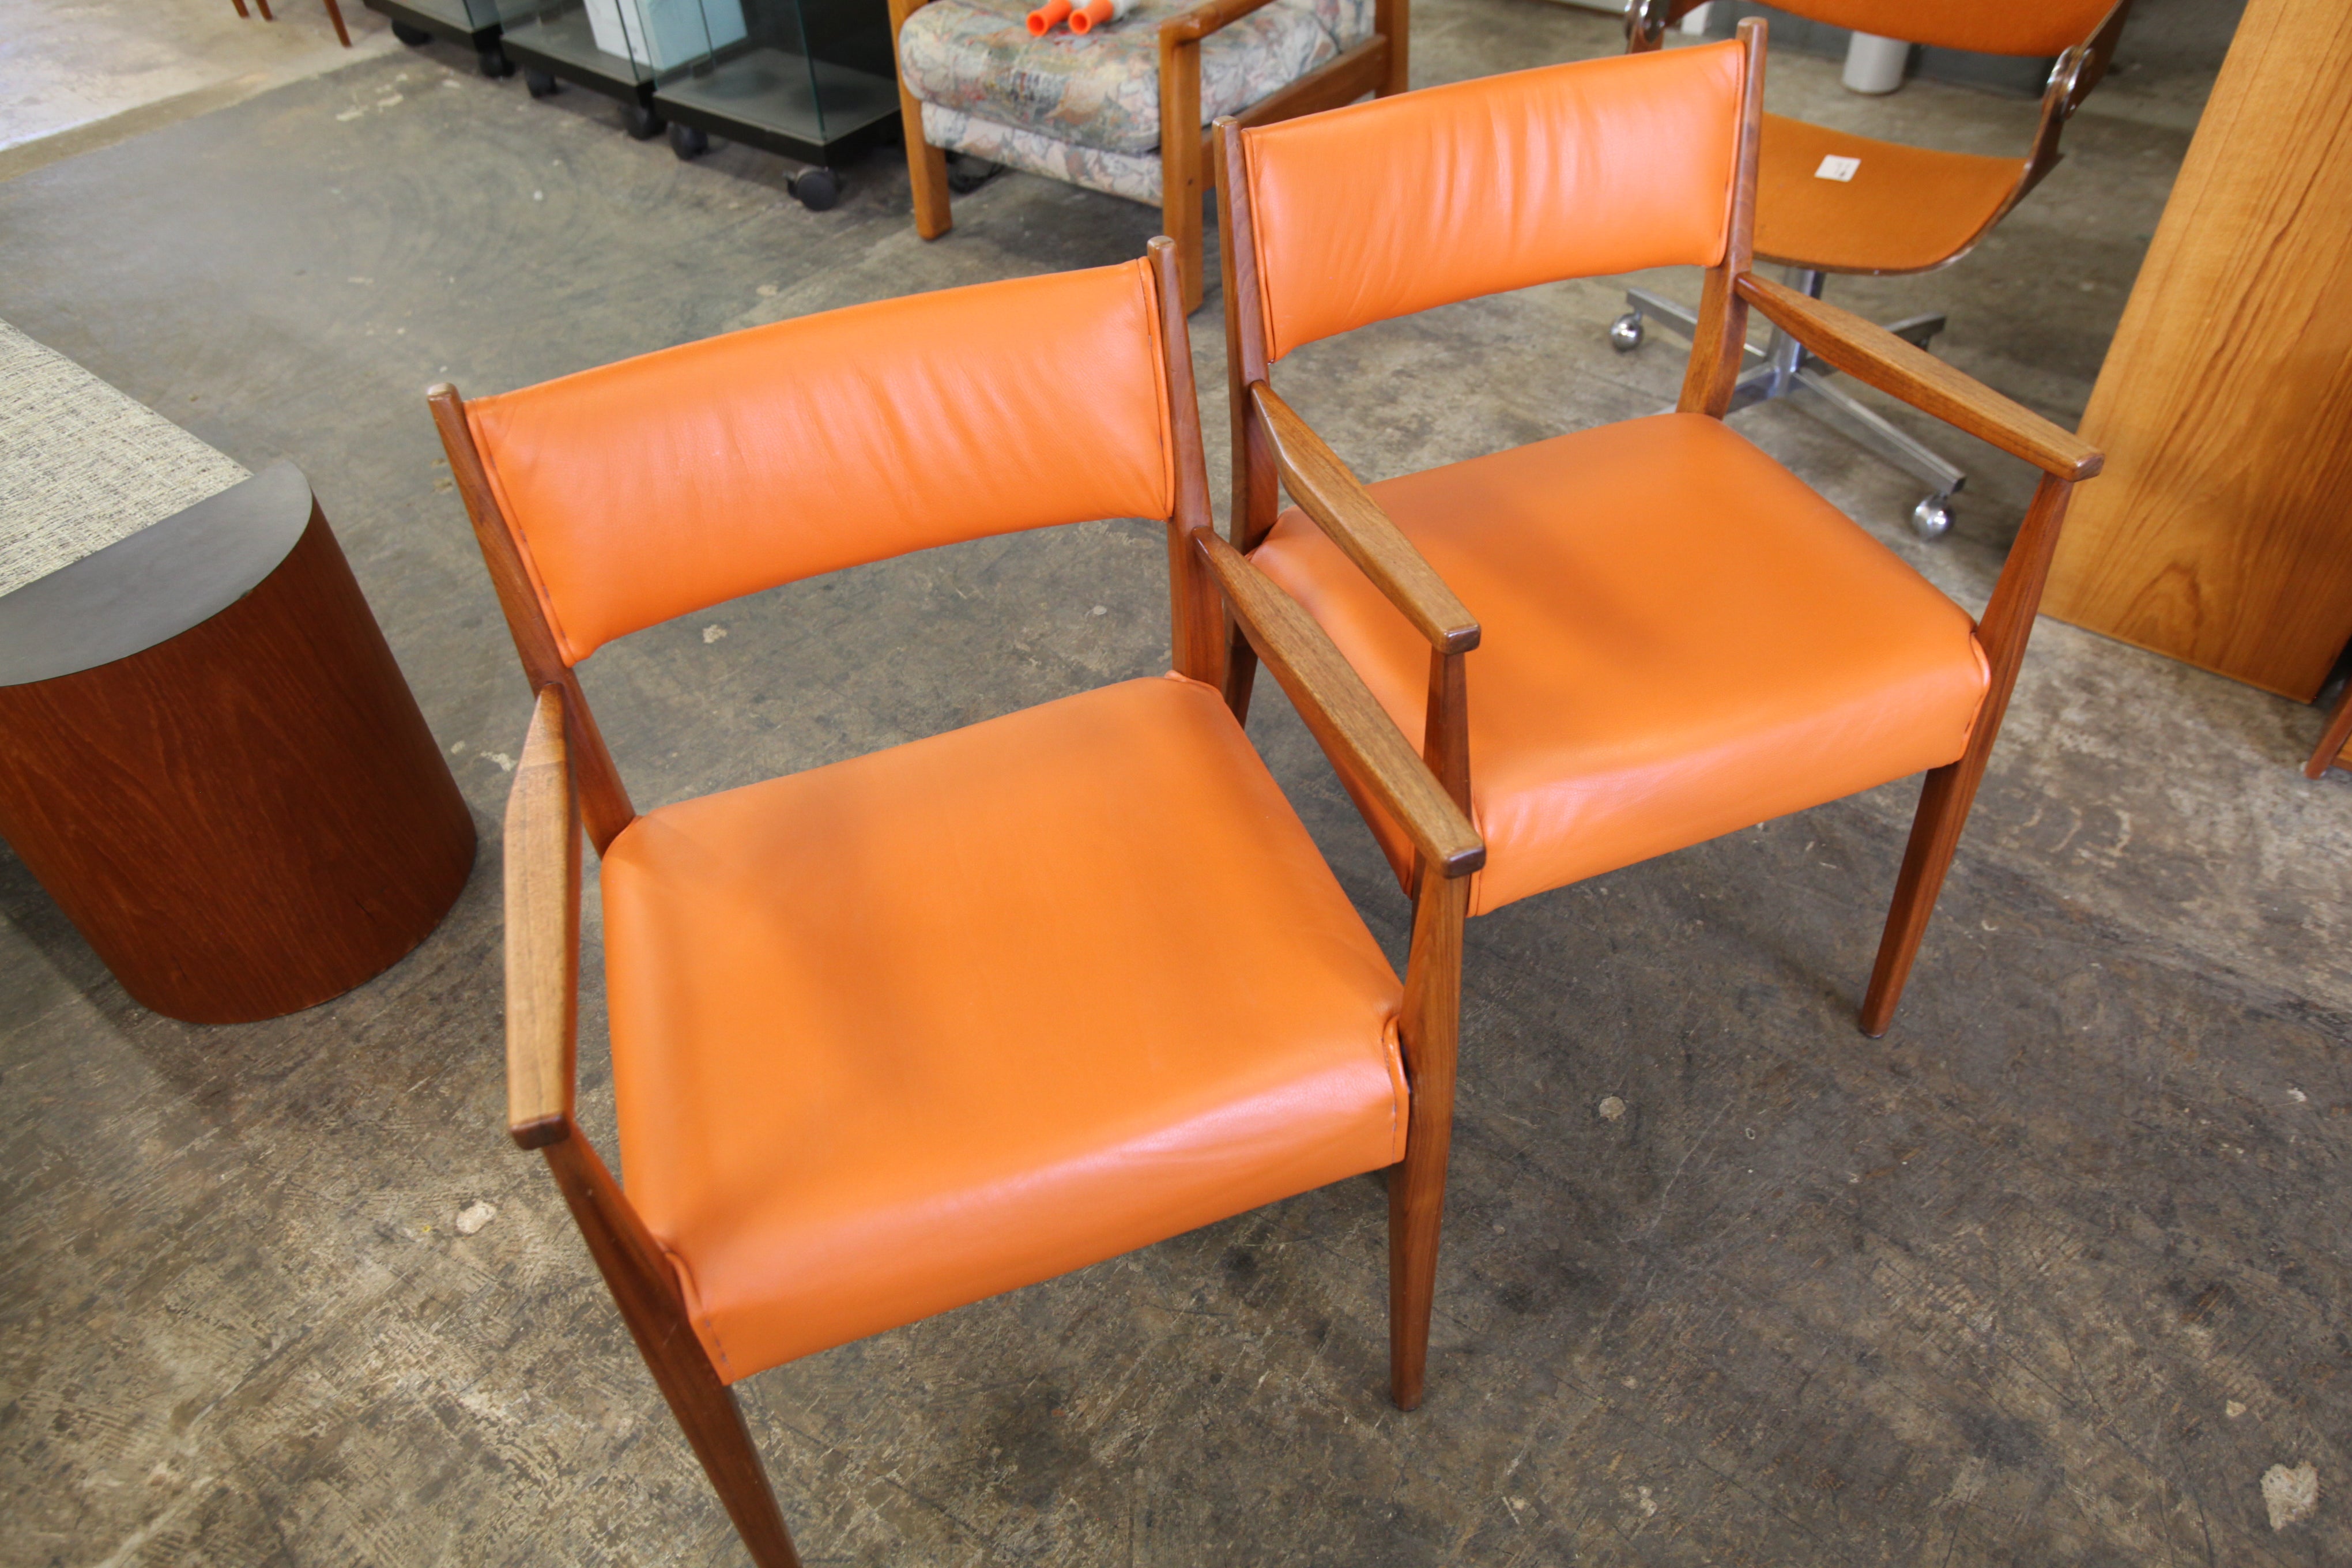 Vintage Walnut Chair Redone in Orange Leather (21.5"W x 20"D x 33.25"H)